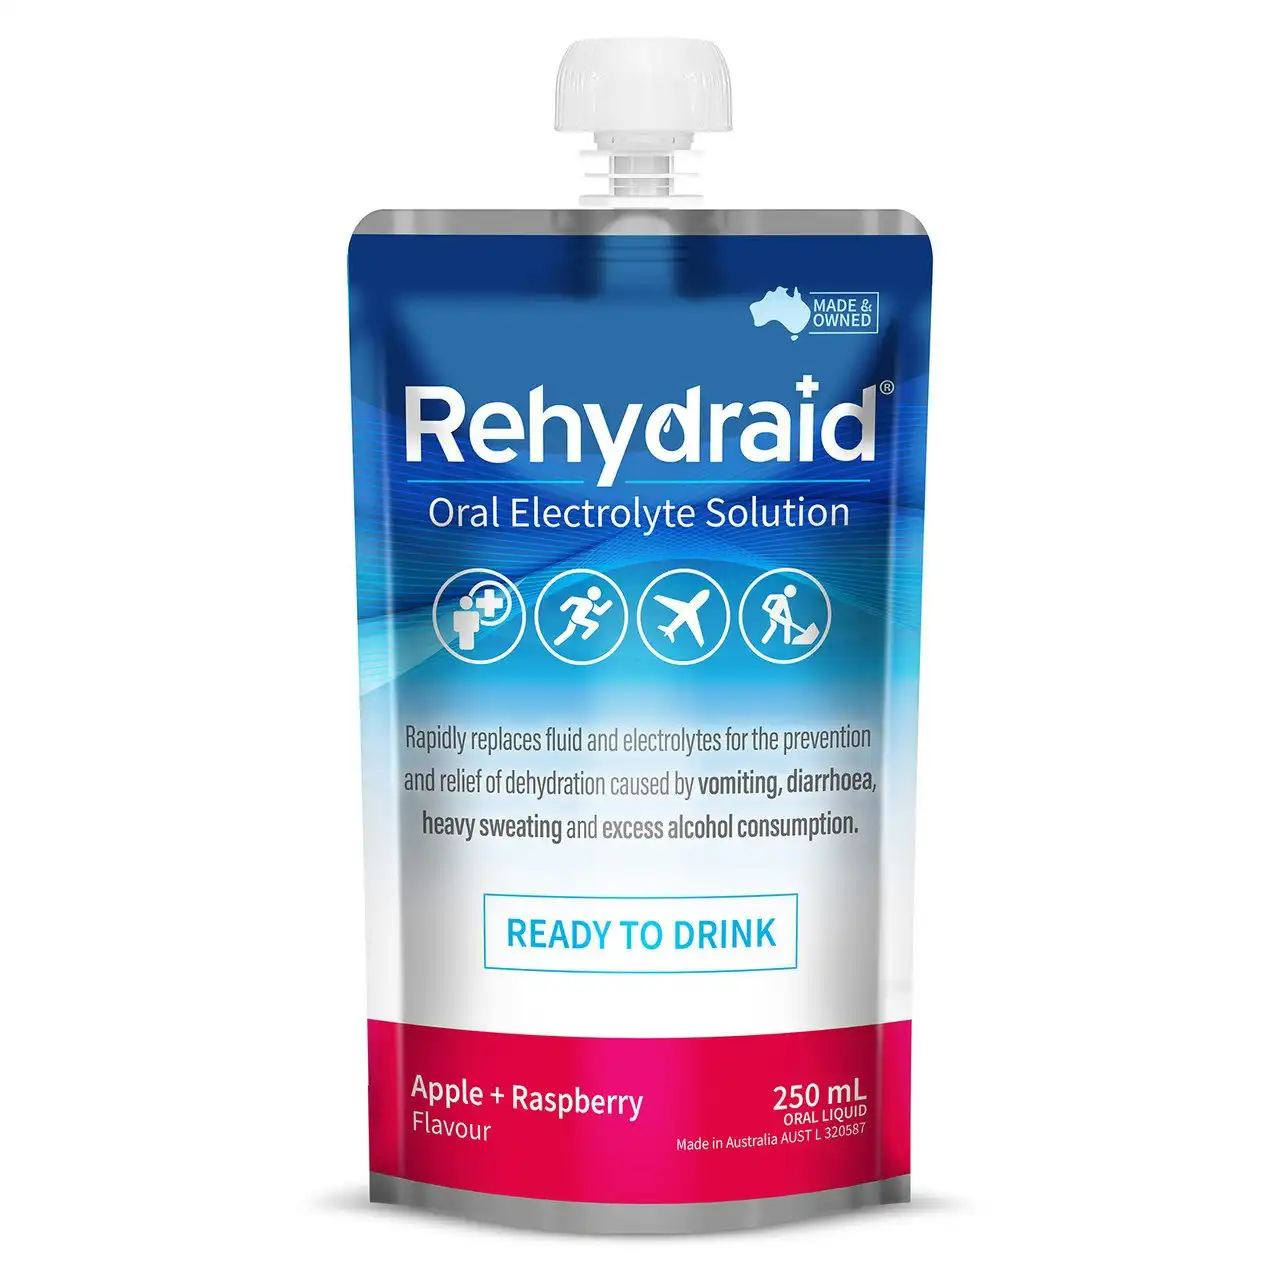 Rehydraid Oral Electrolyte Solution Apply + Raspberry Flavour 250ml